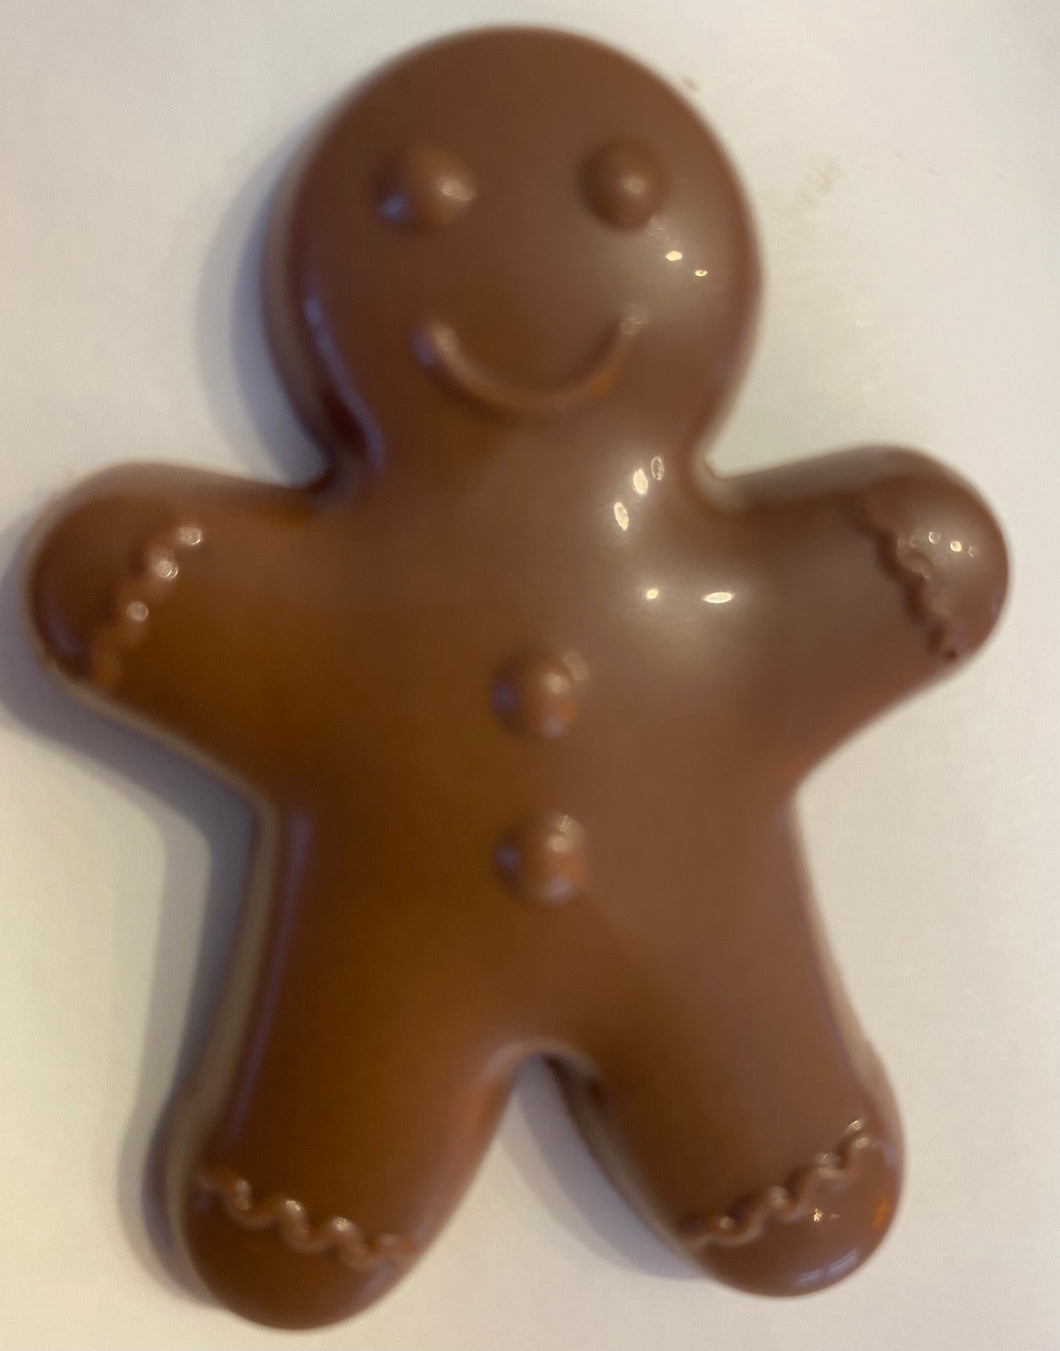 Handmade chocolate gingerbread man